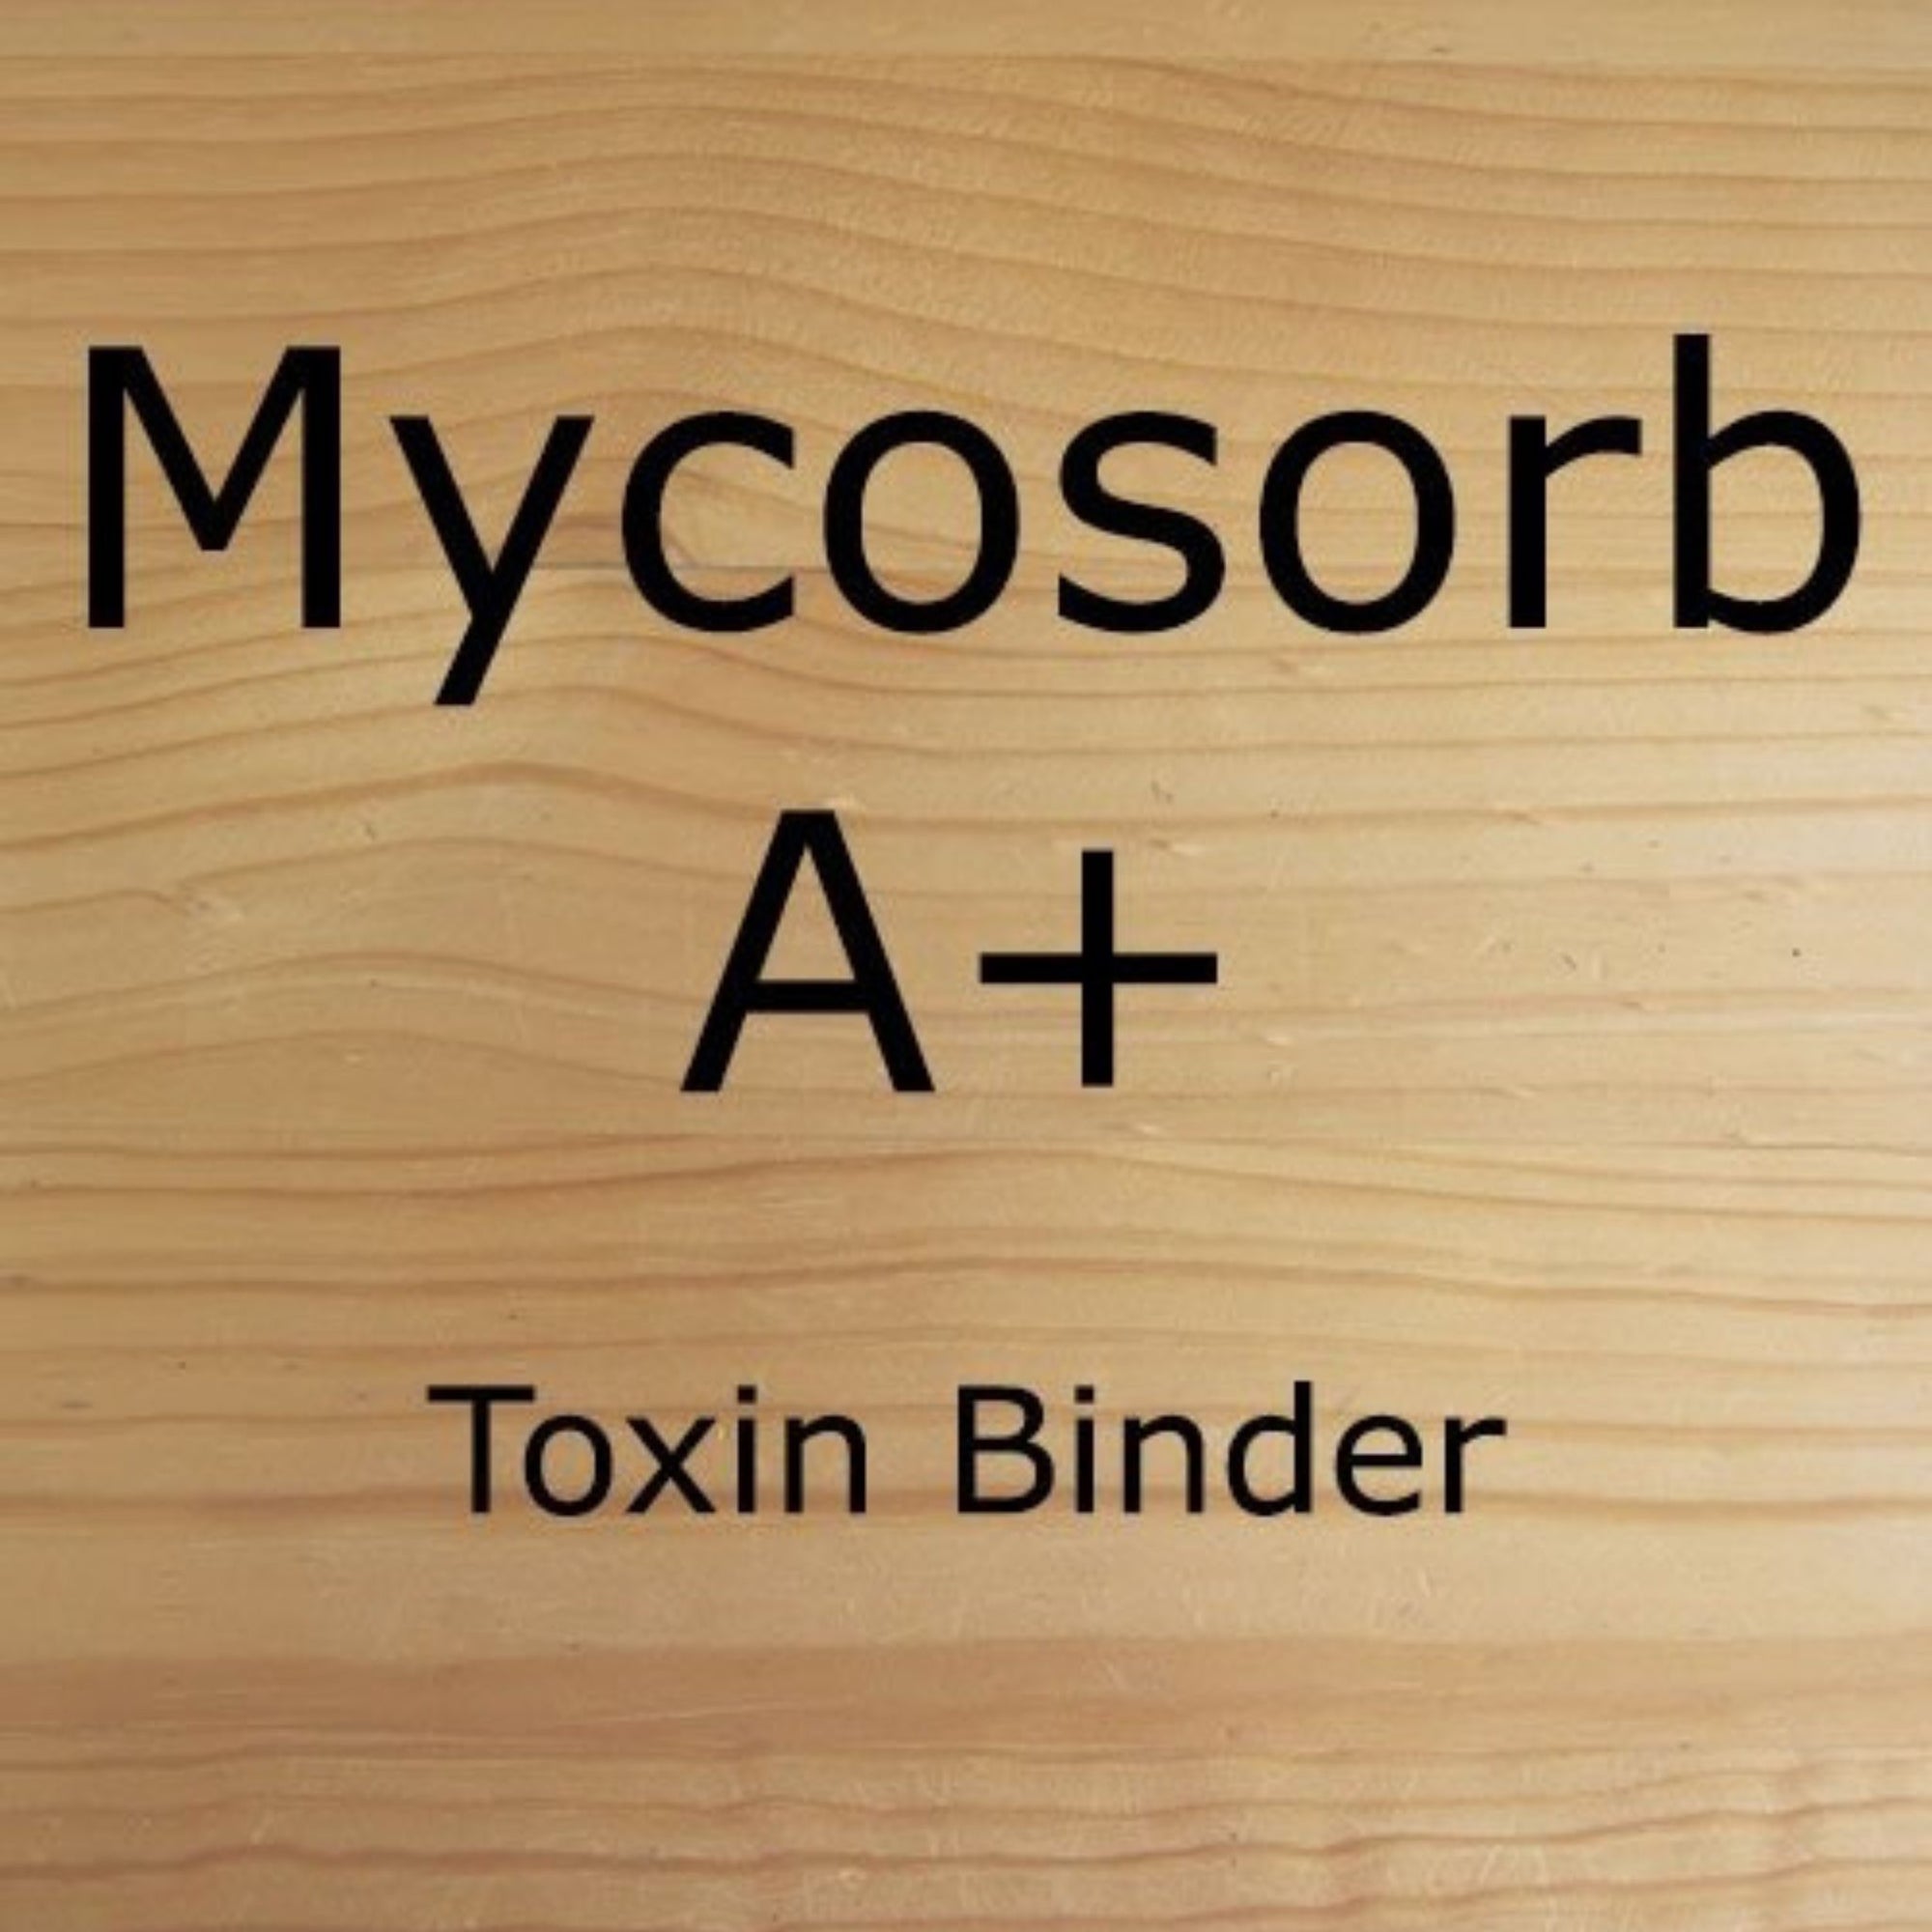 Mycosorb-A-_-Toxin-Binder-The-Horse-Rug-Whisperer